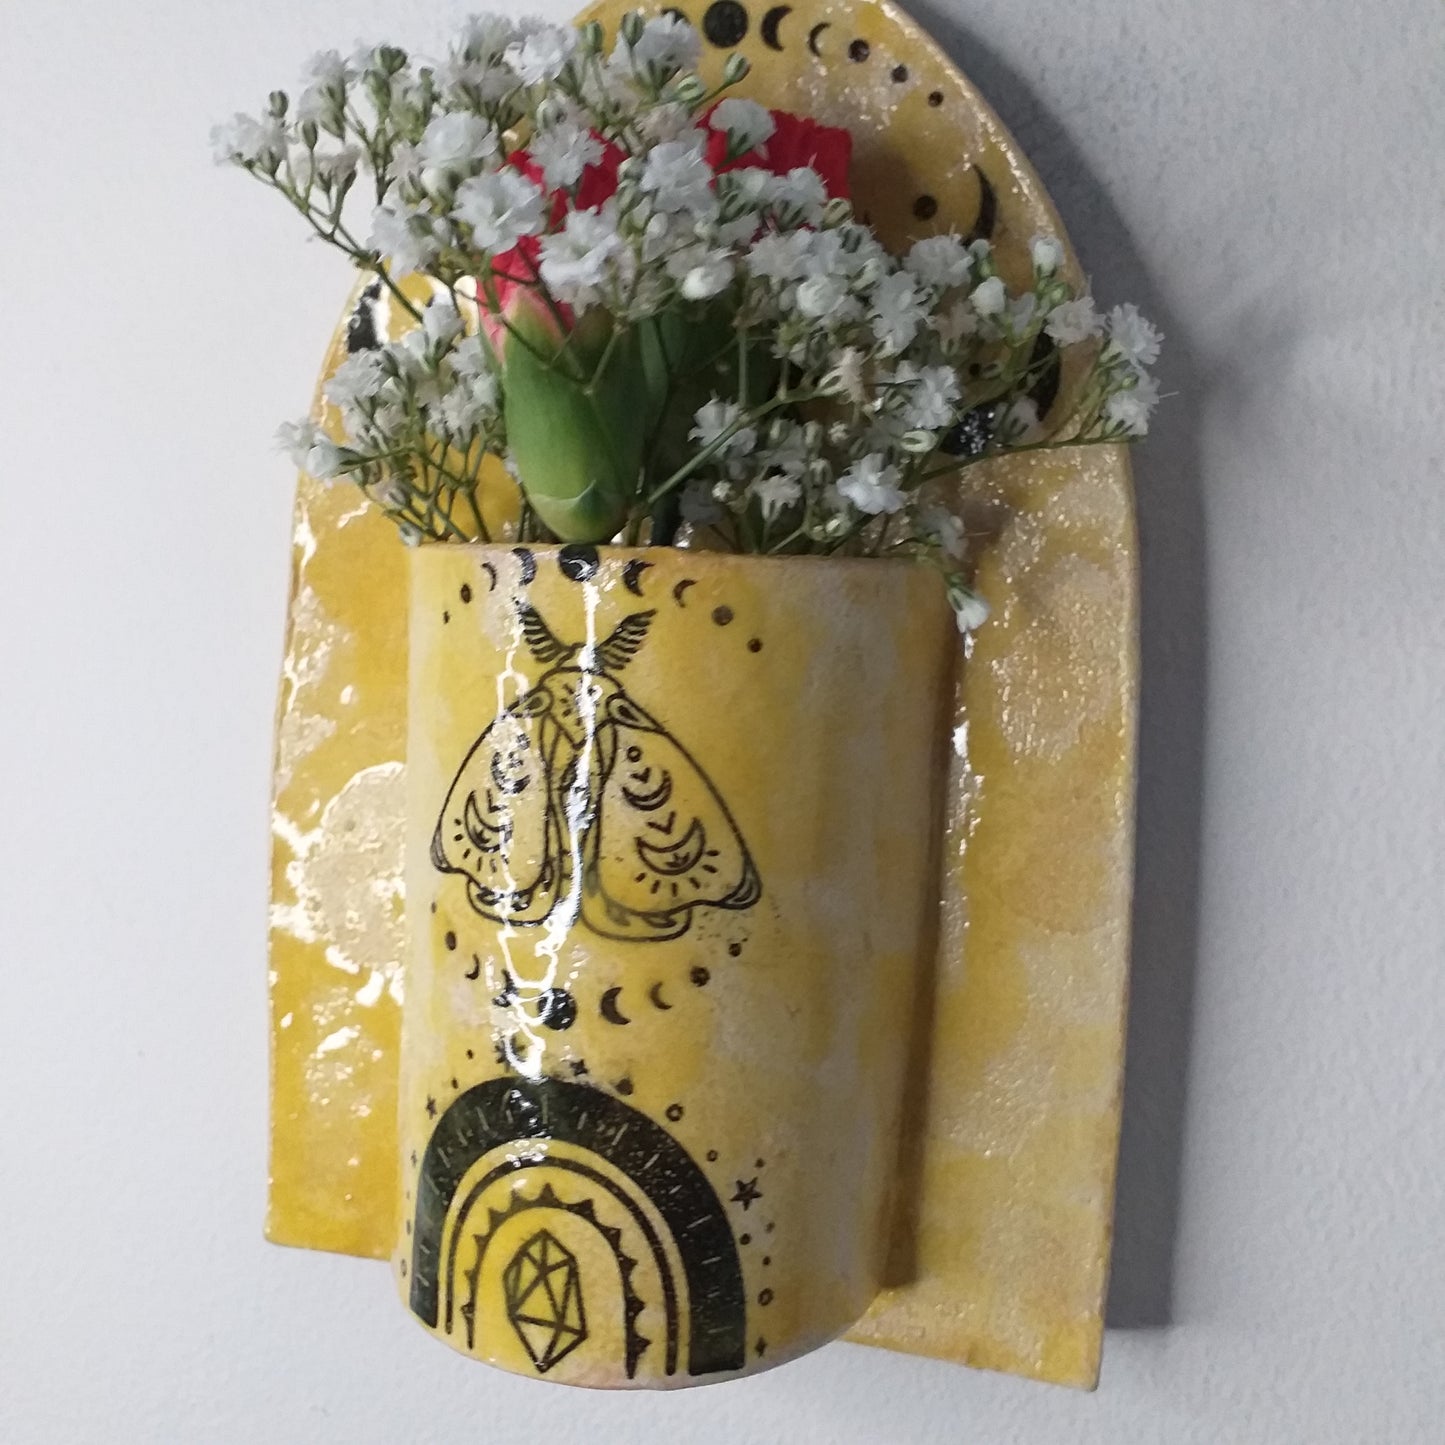 Wall vase